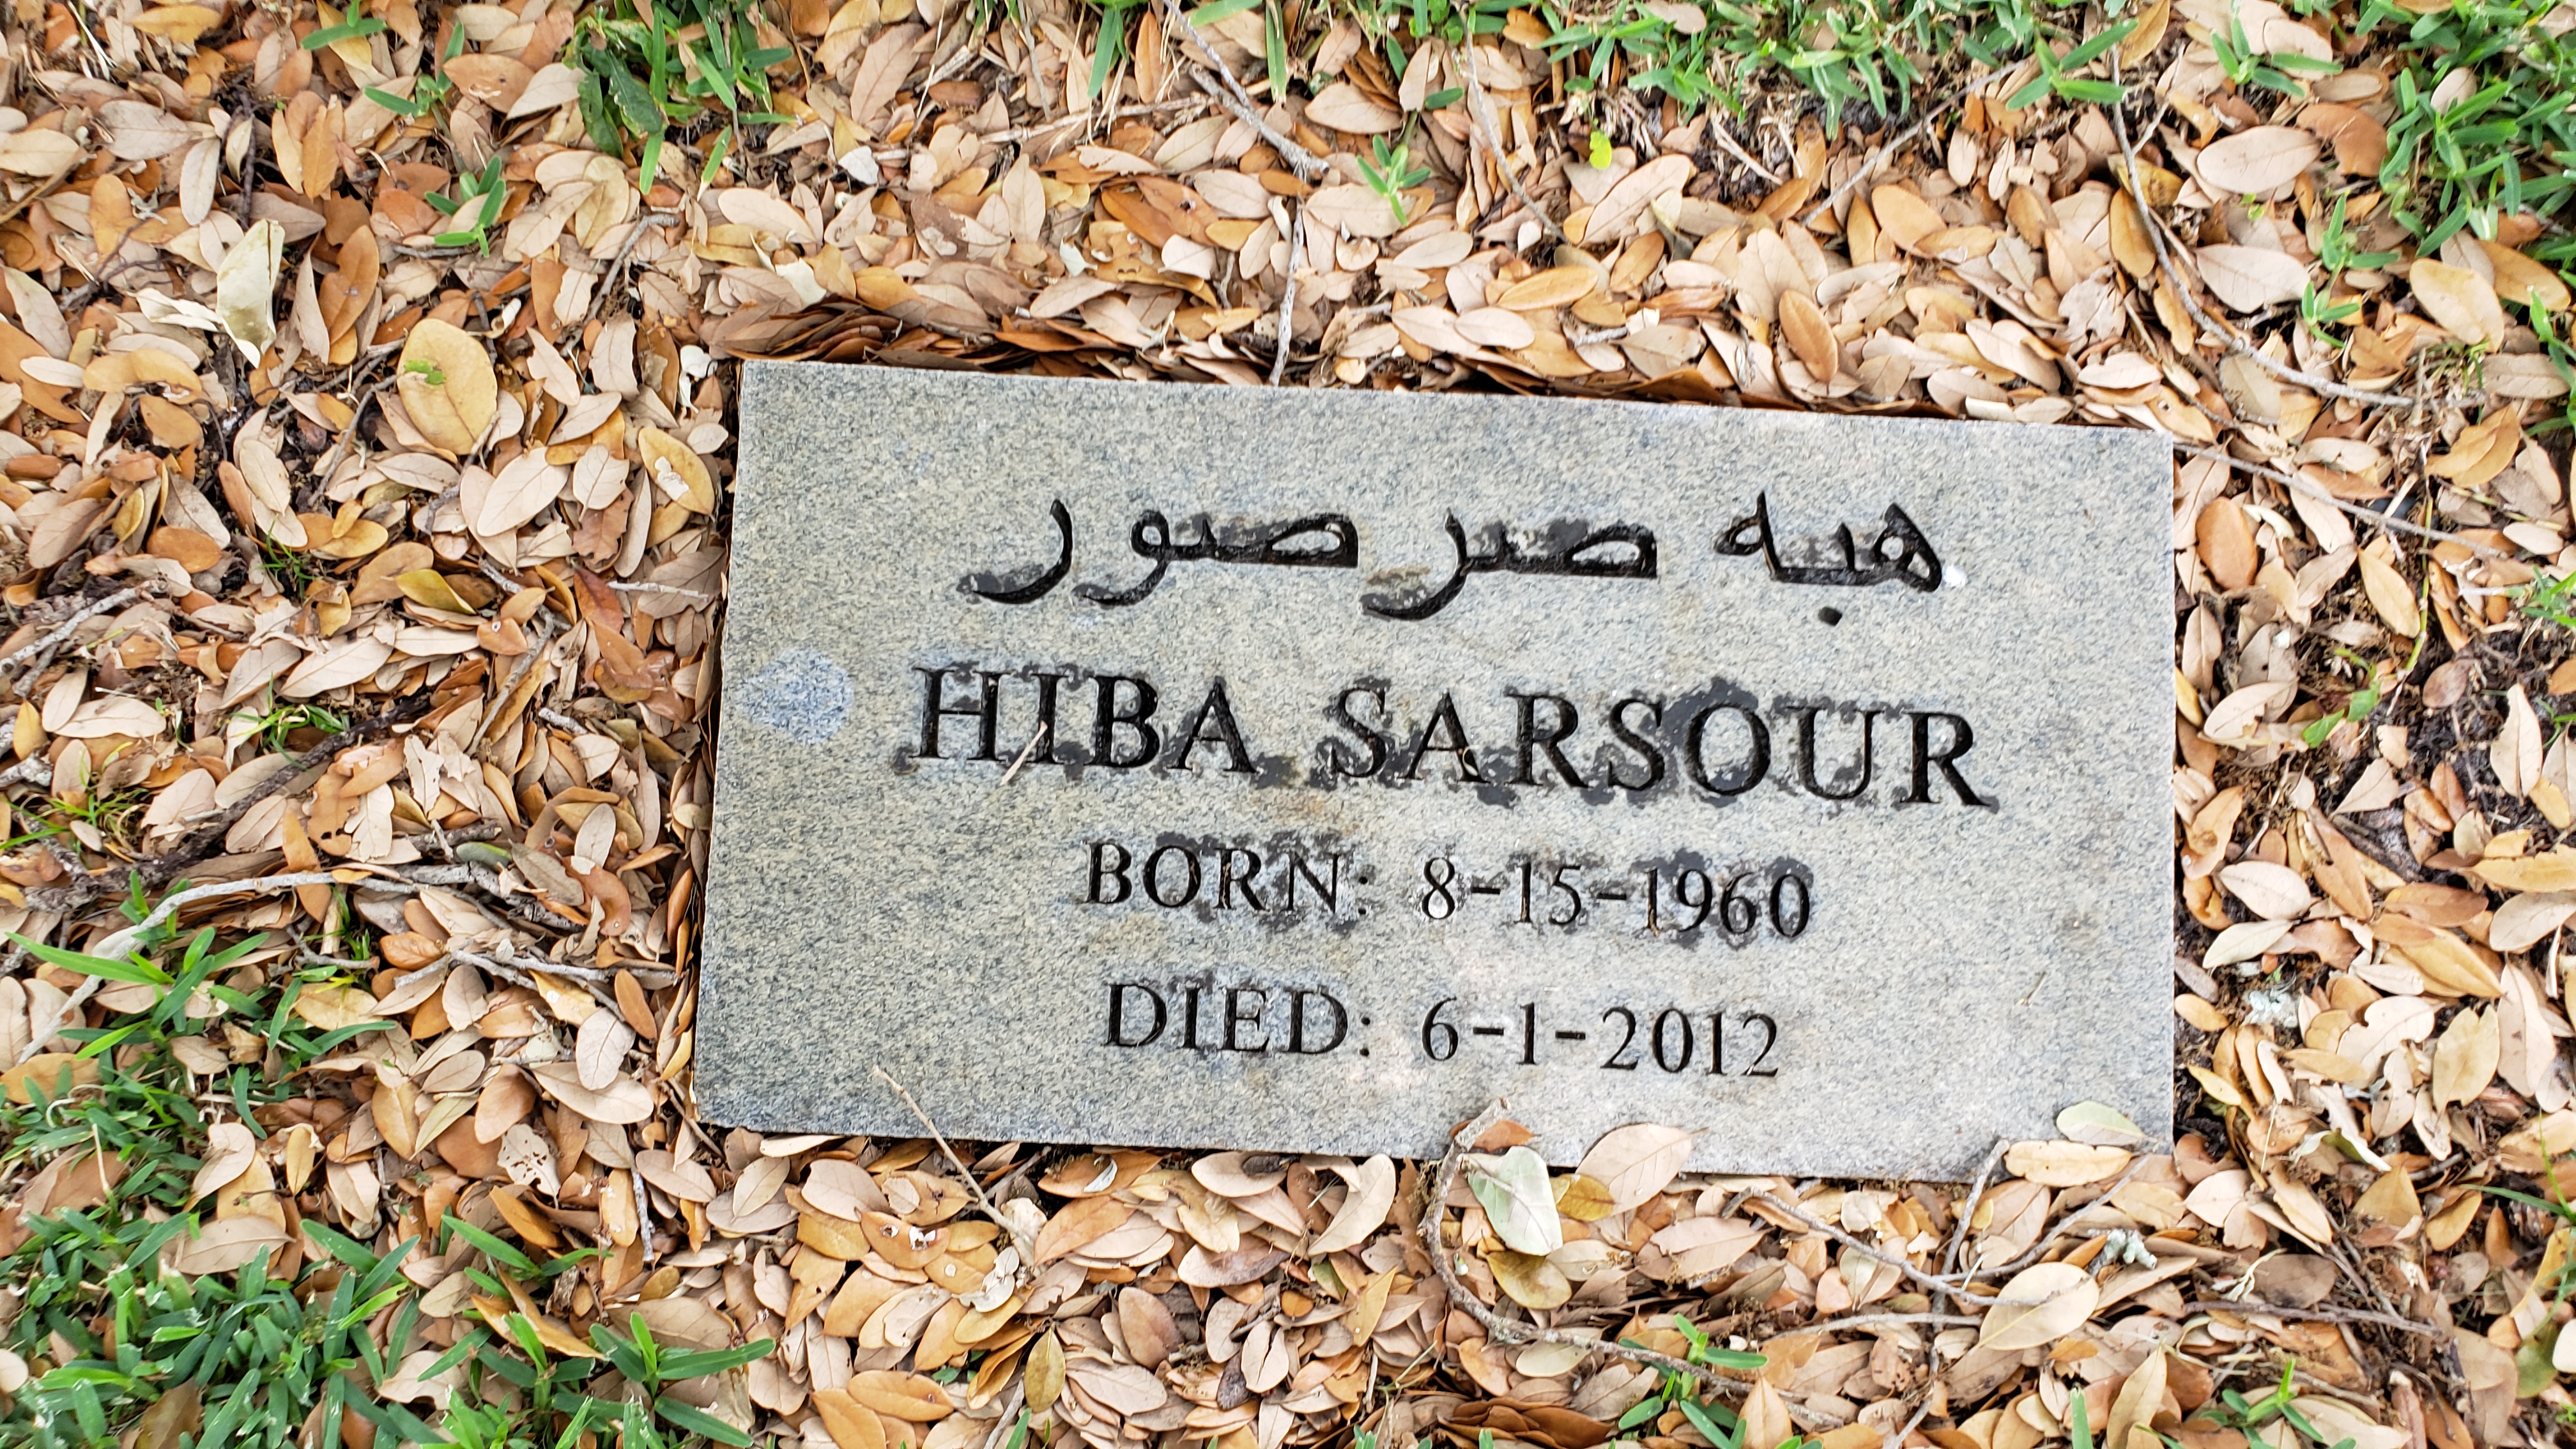 Hiba Sarsour